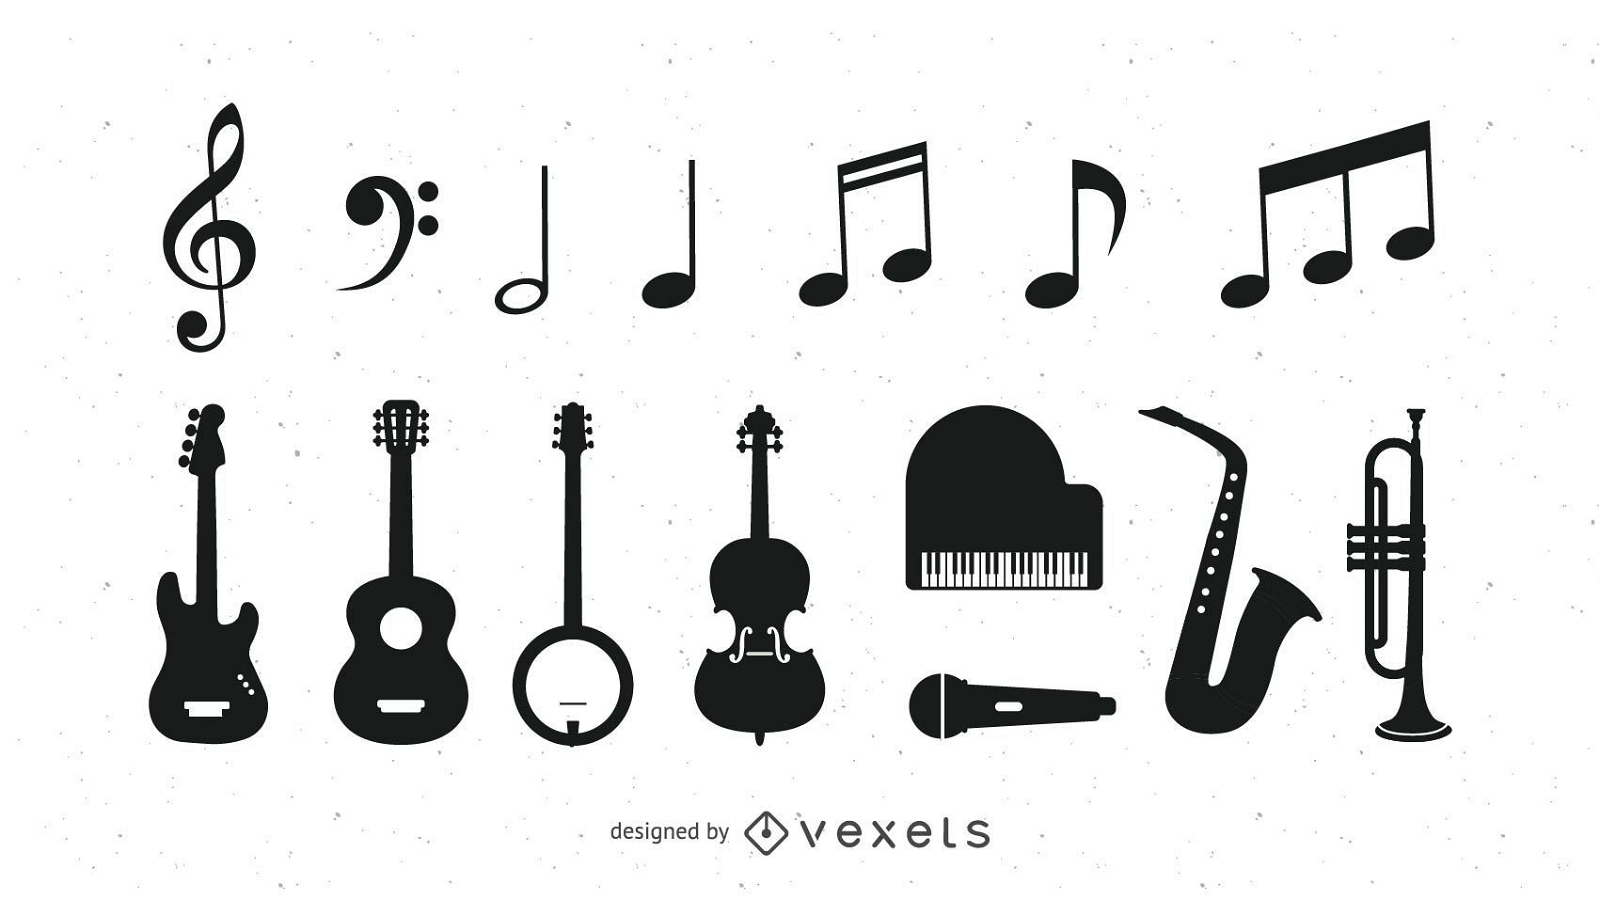 Black & White Musical Instrument Icons